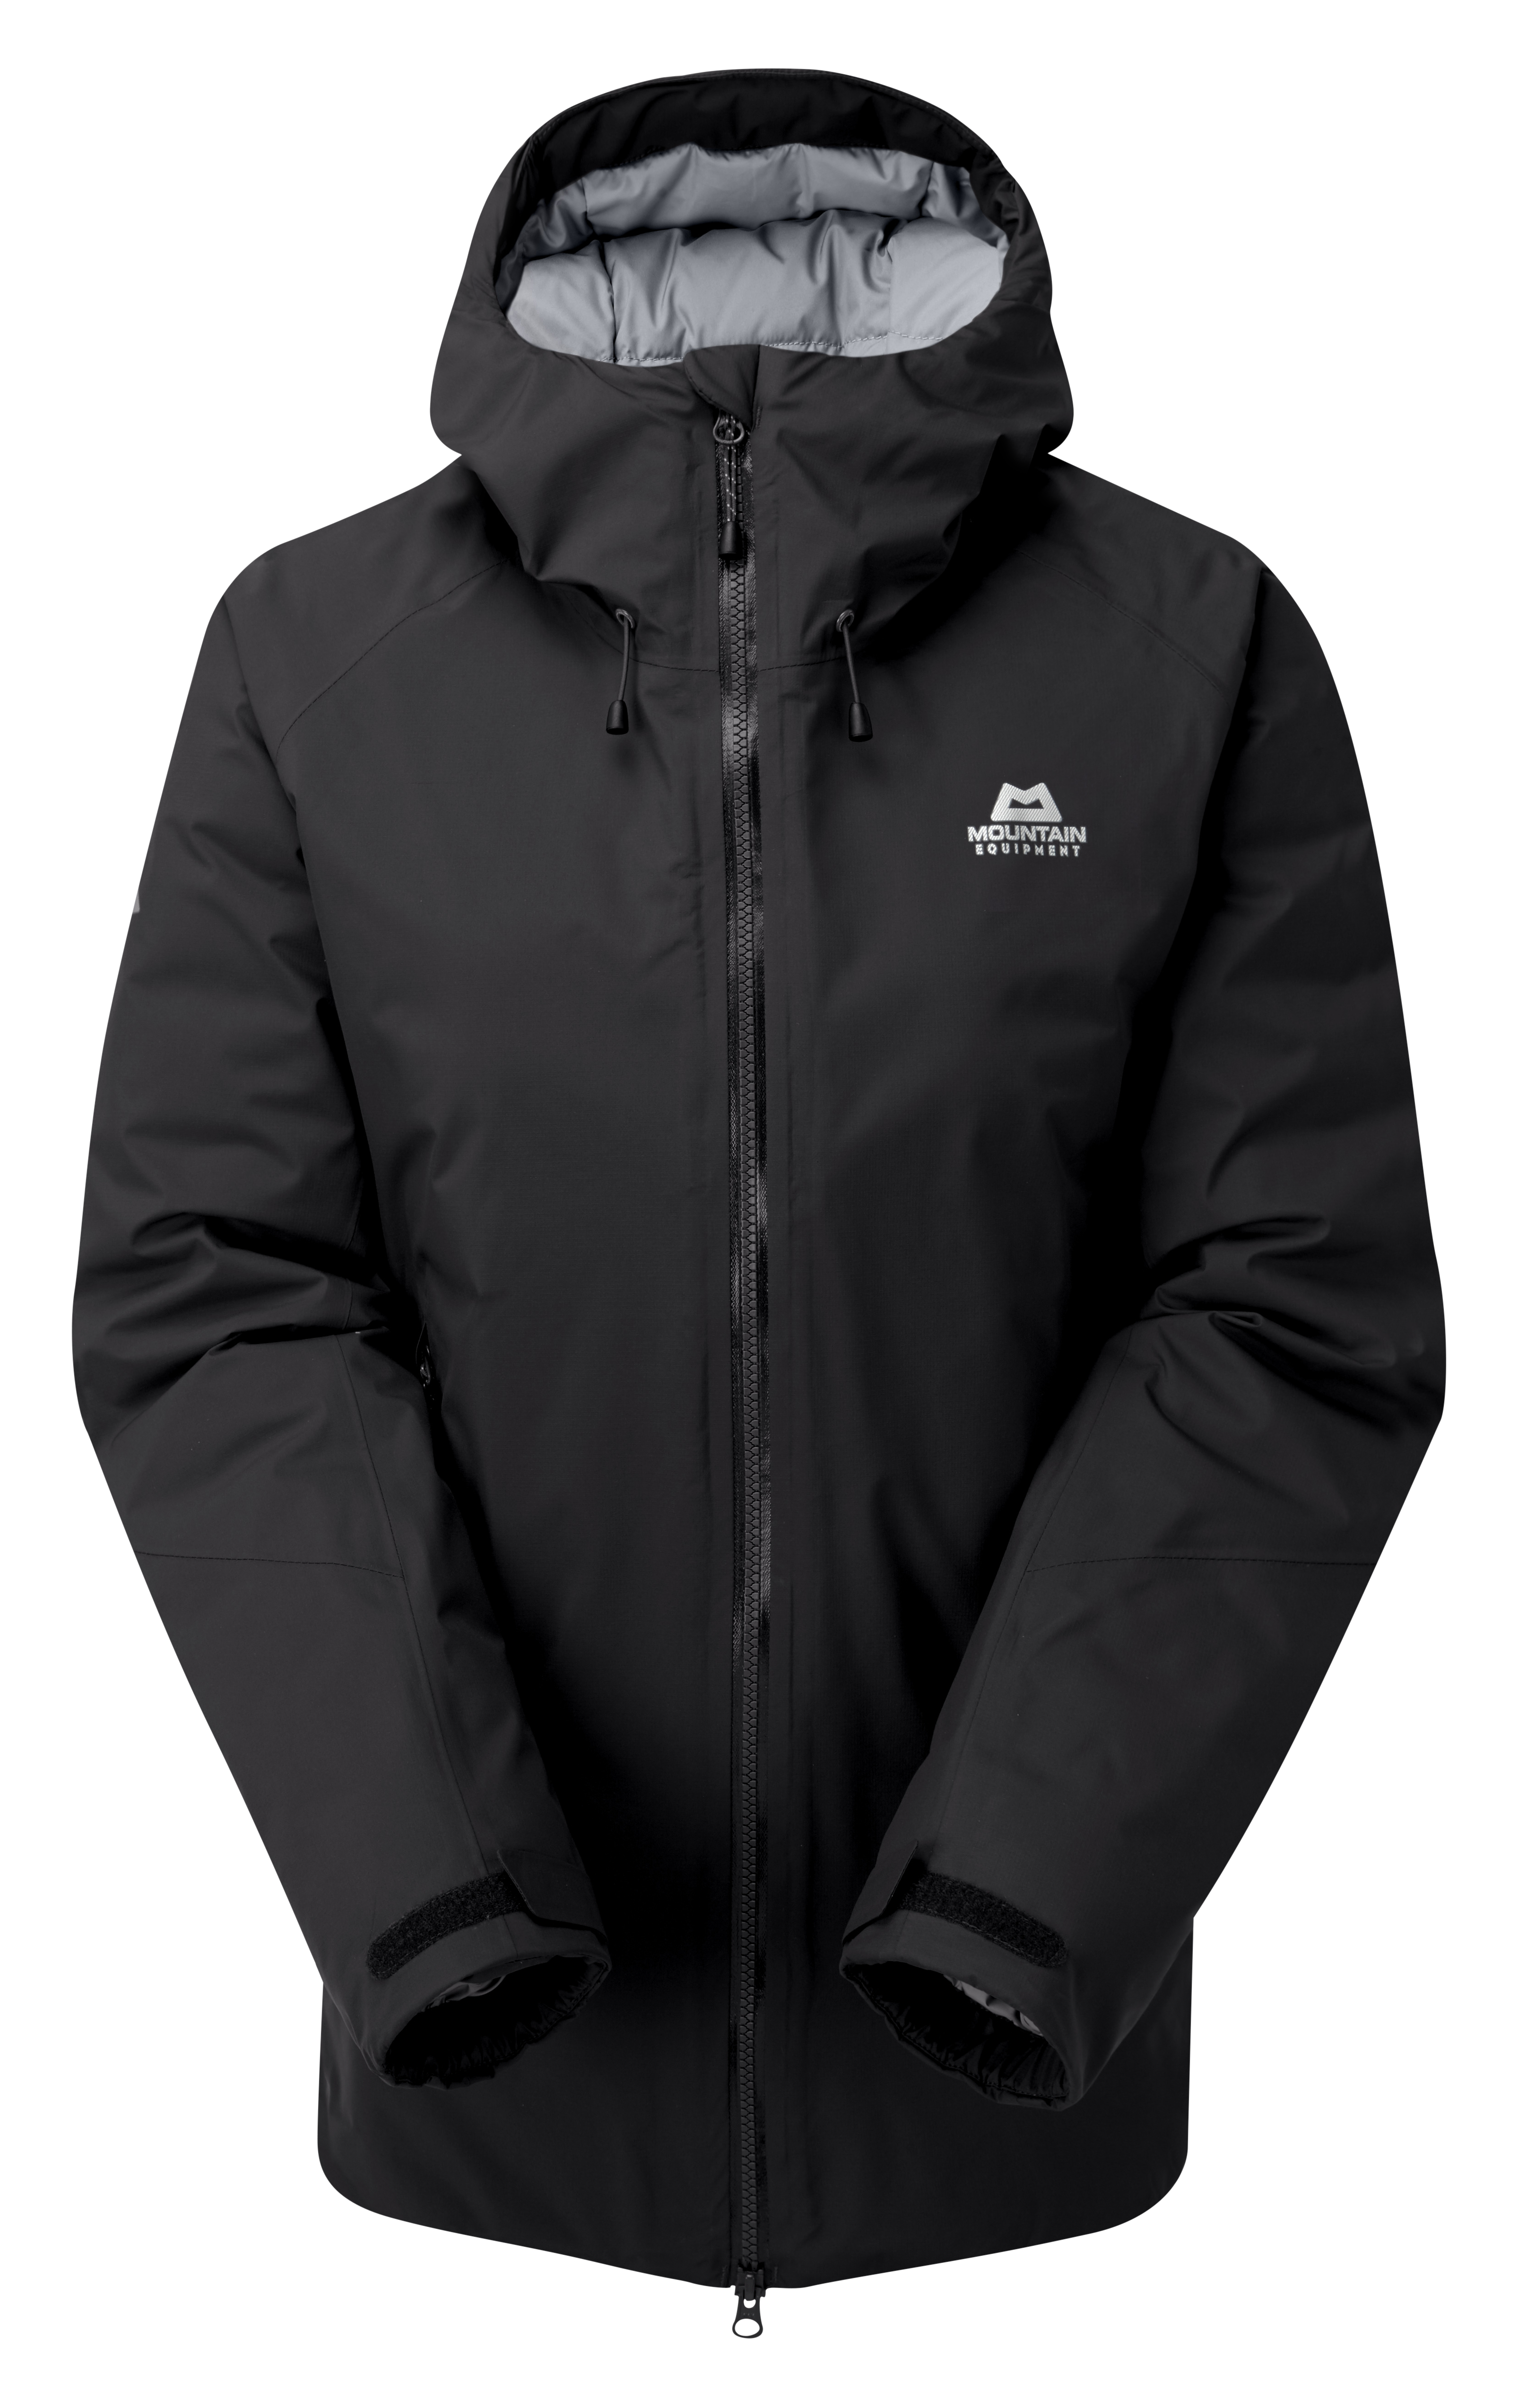 Mountain Equipment Triton Jacket - Hardshell jacket - Women's